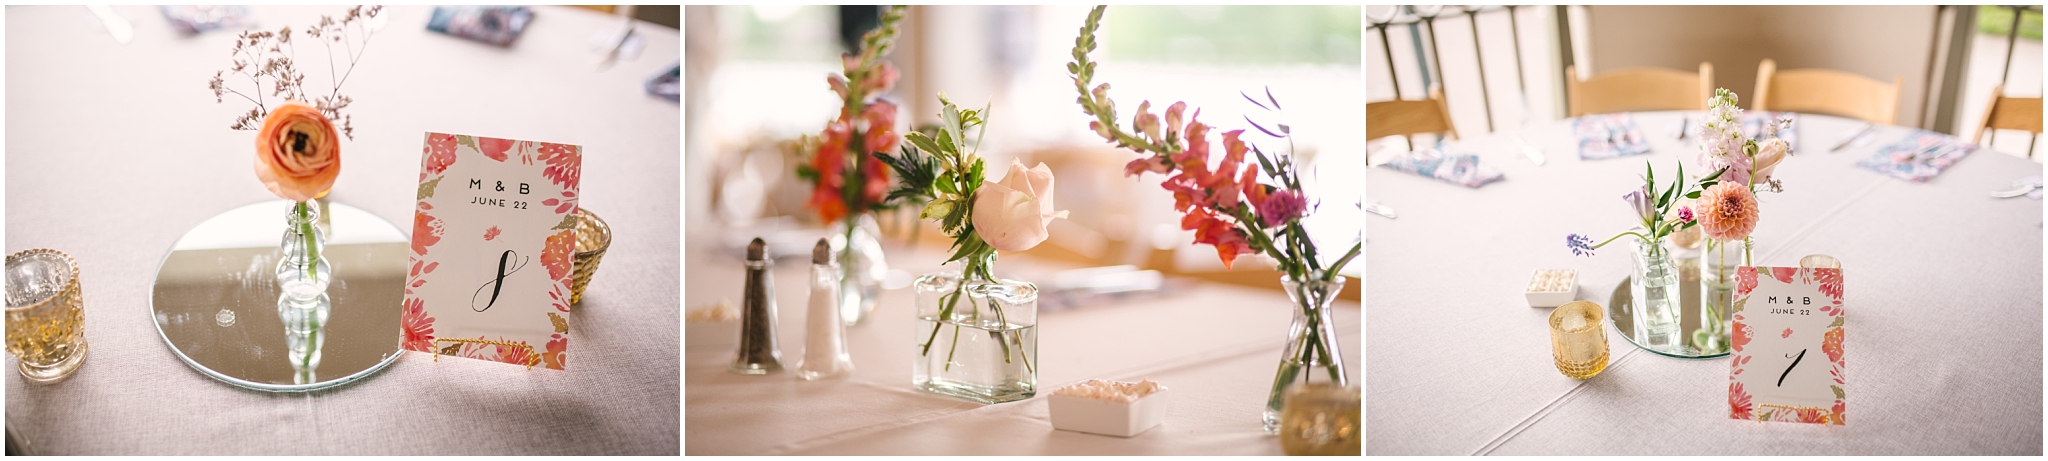 Bright floral details for Washington Park Boathouse wedding in Denver Colorado